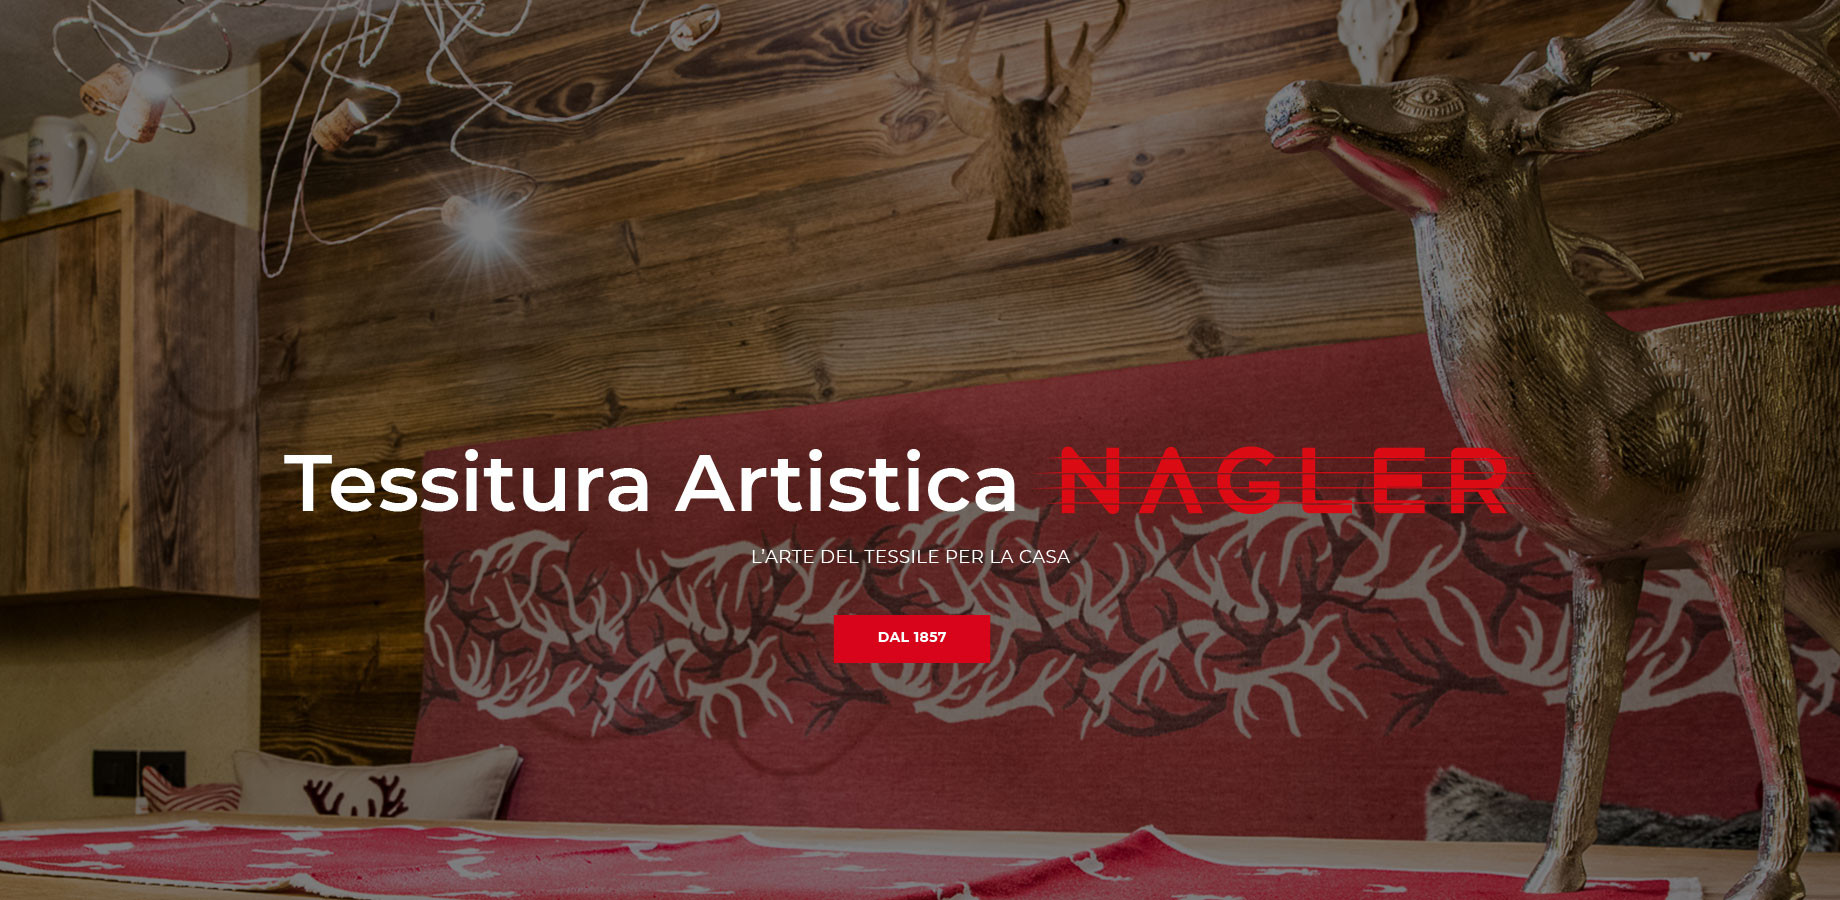 Tessitura Artistica Nagler in Alta Badia